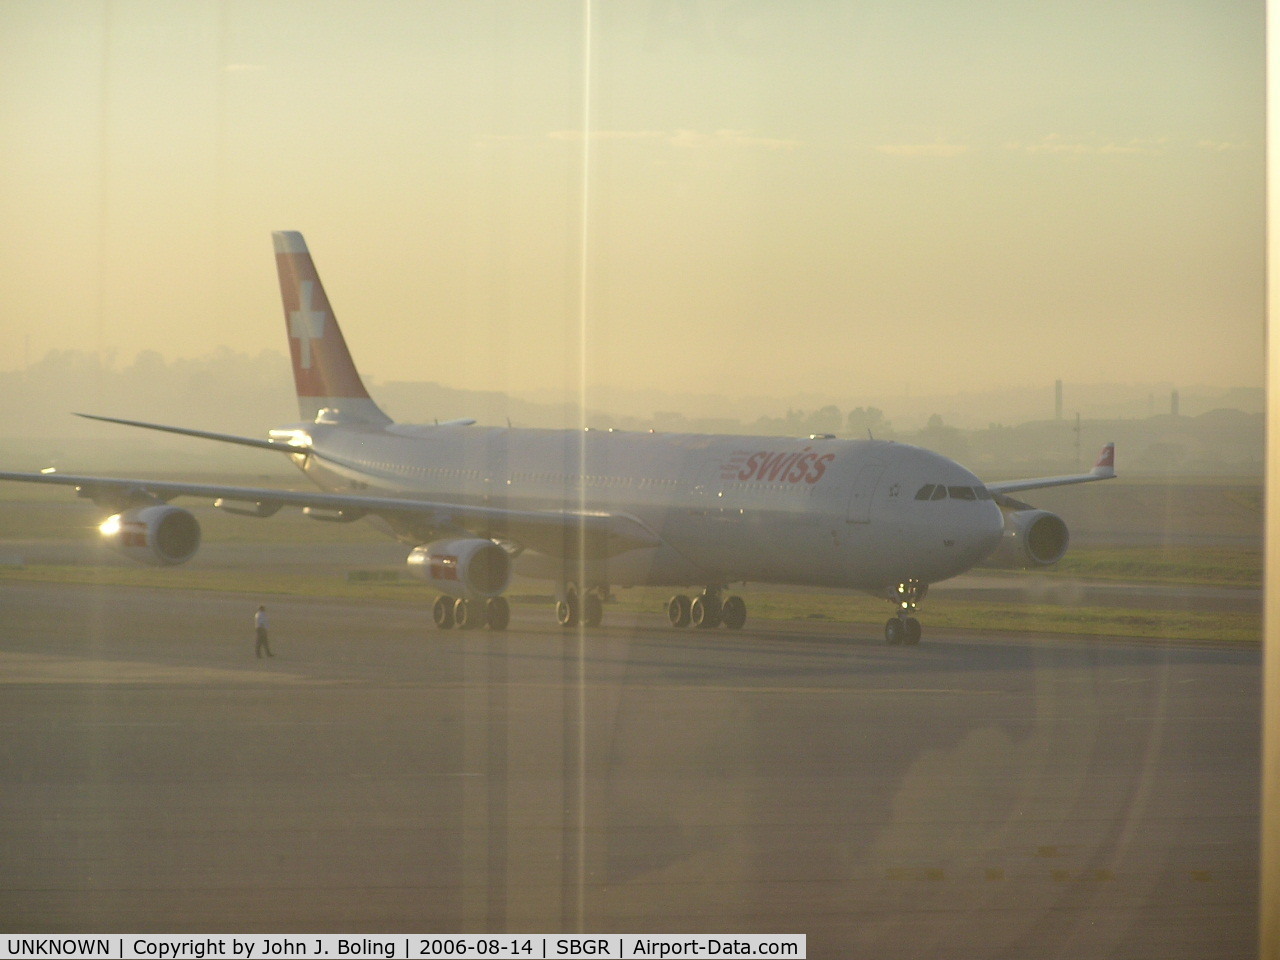 UNKNOWN, , Swiss A340 departing Sao Paulo, Brazil